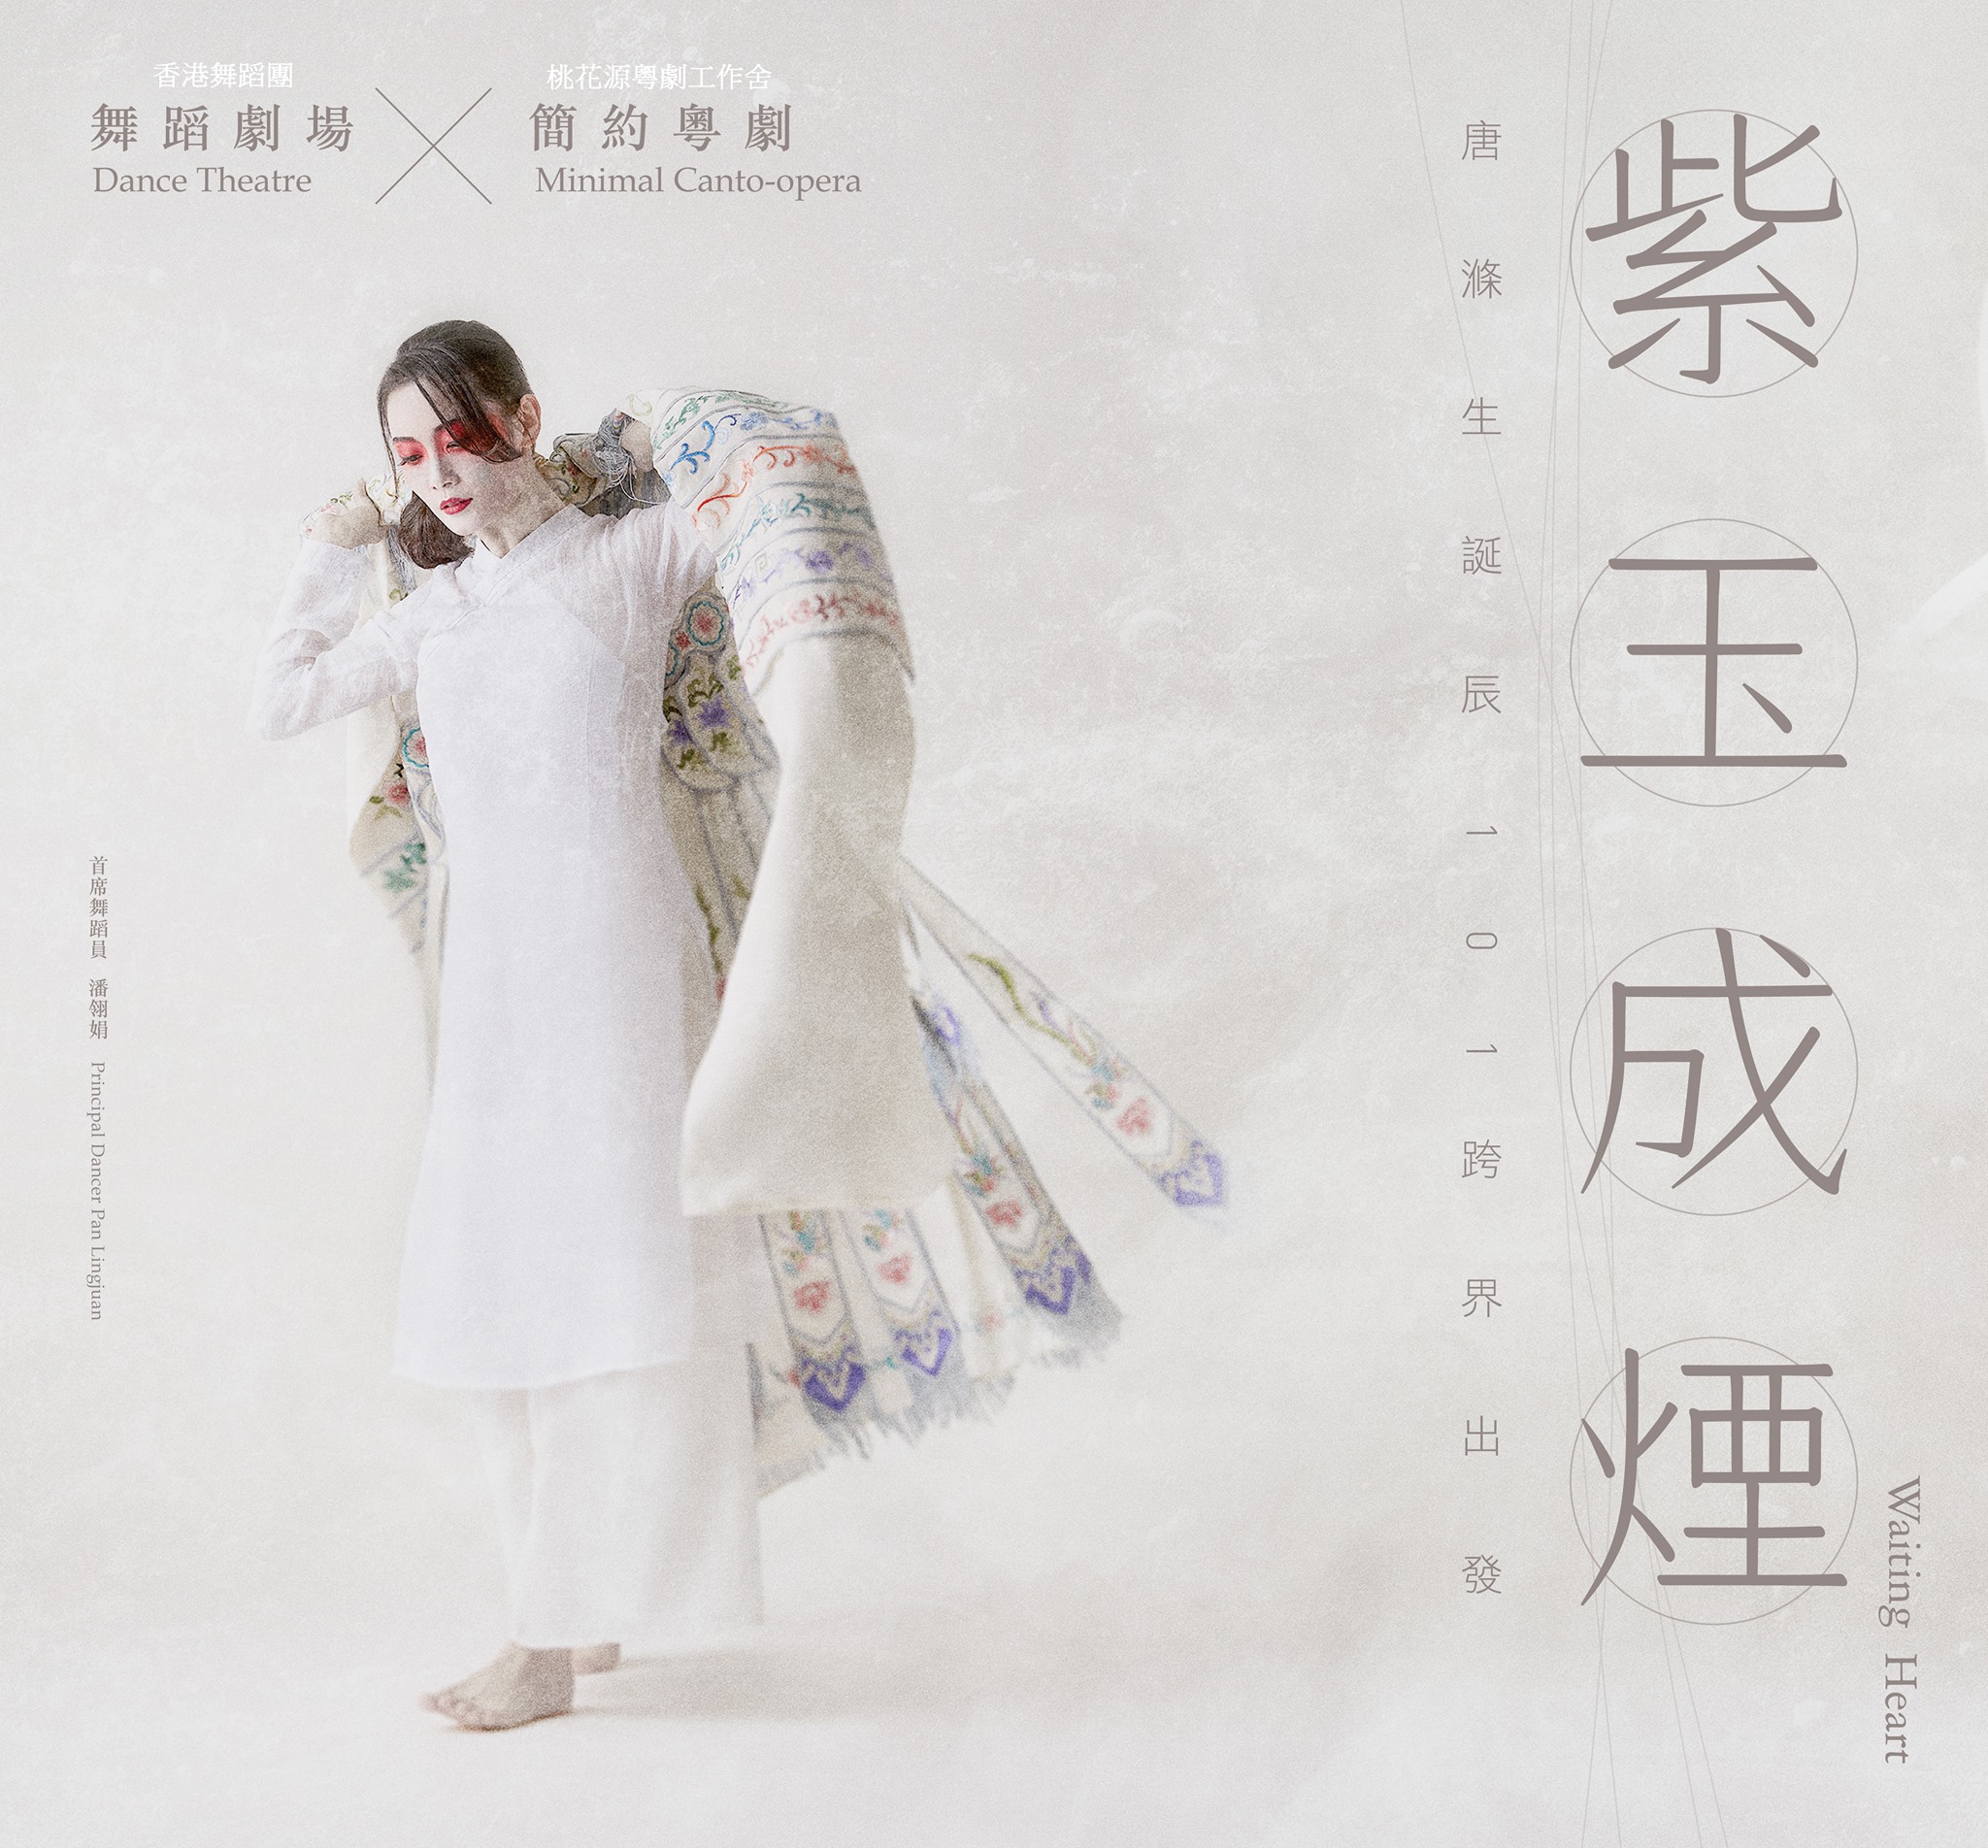 HK DANCE. 紫玉成煙 (Waiting Heart) Poster. 2018